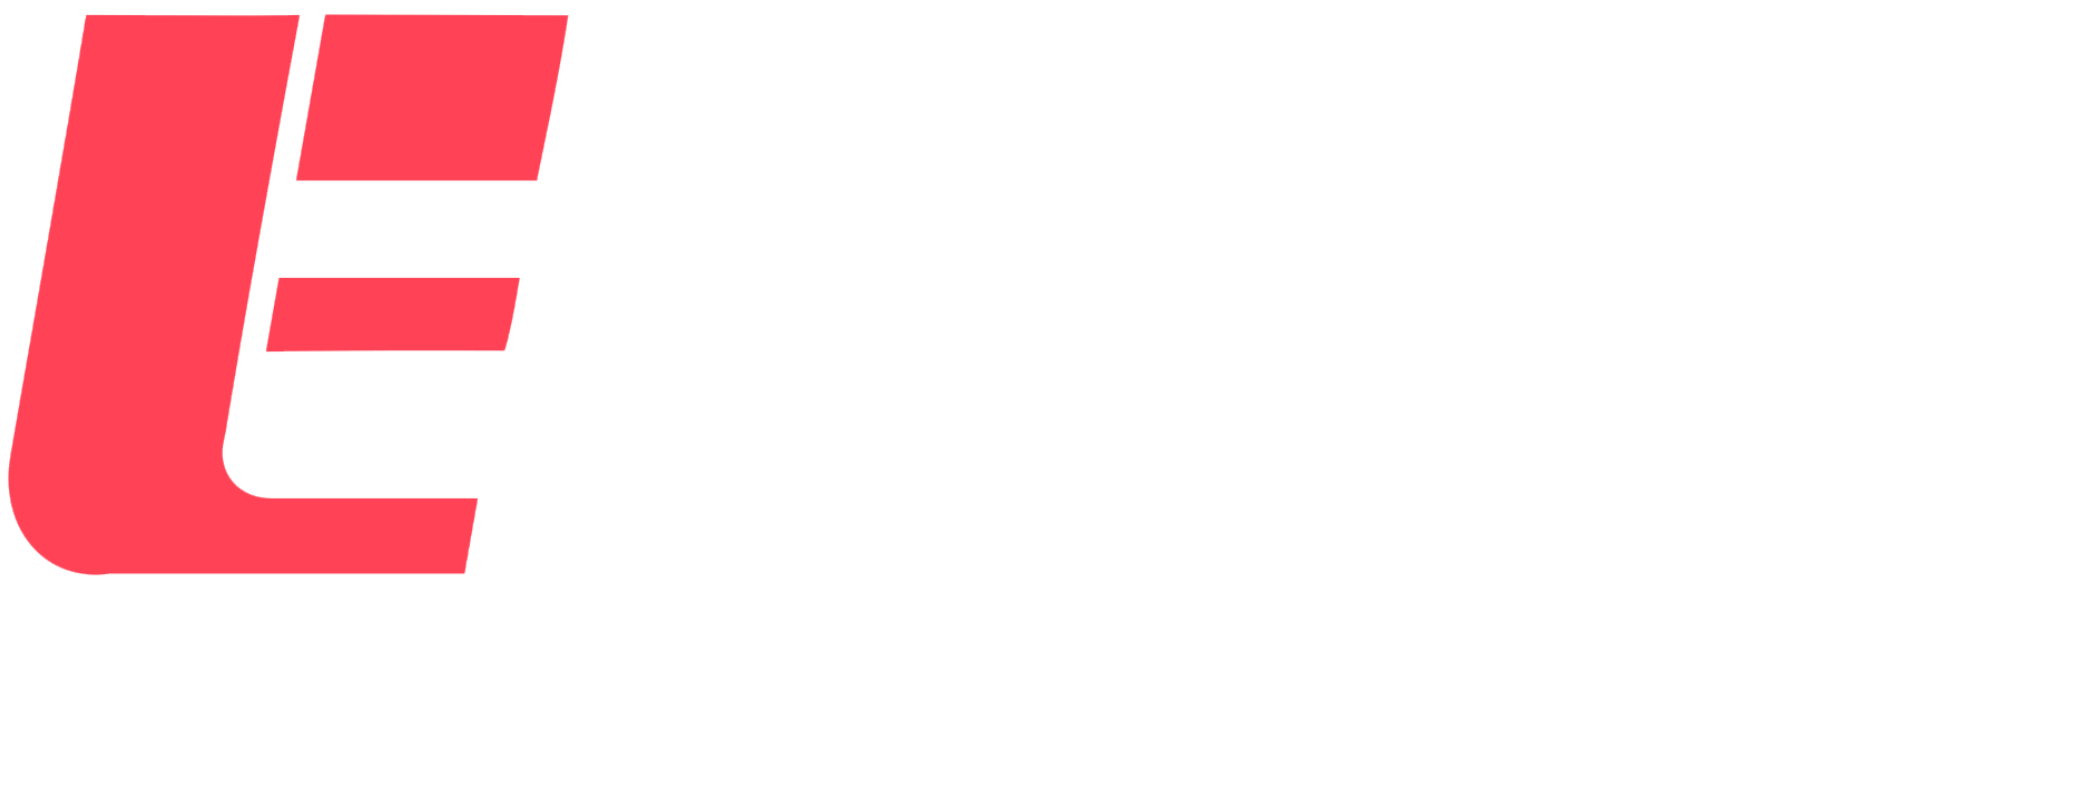 Web Application - EvoortSolutions | Web App Development Service | Web Development Company USA - Evoort Solutions